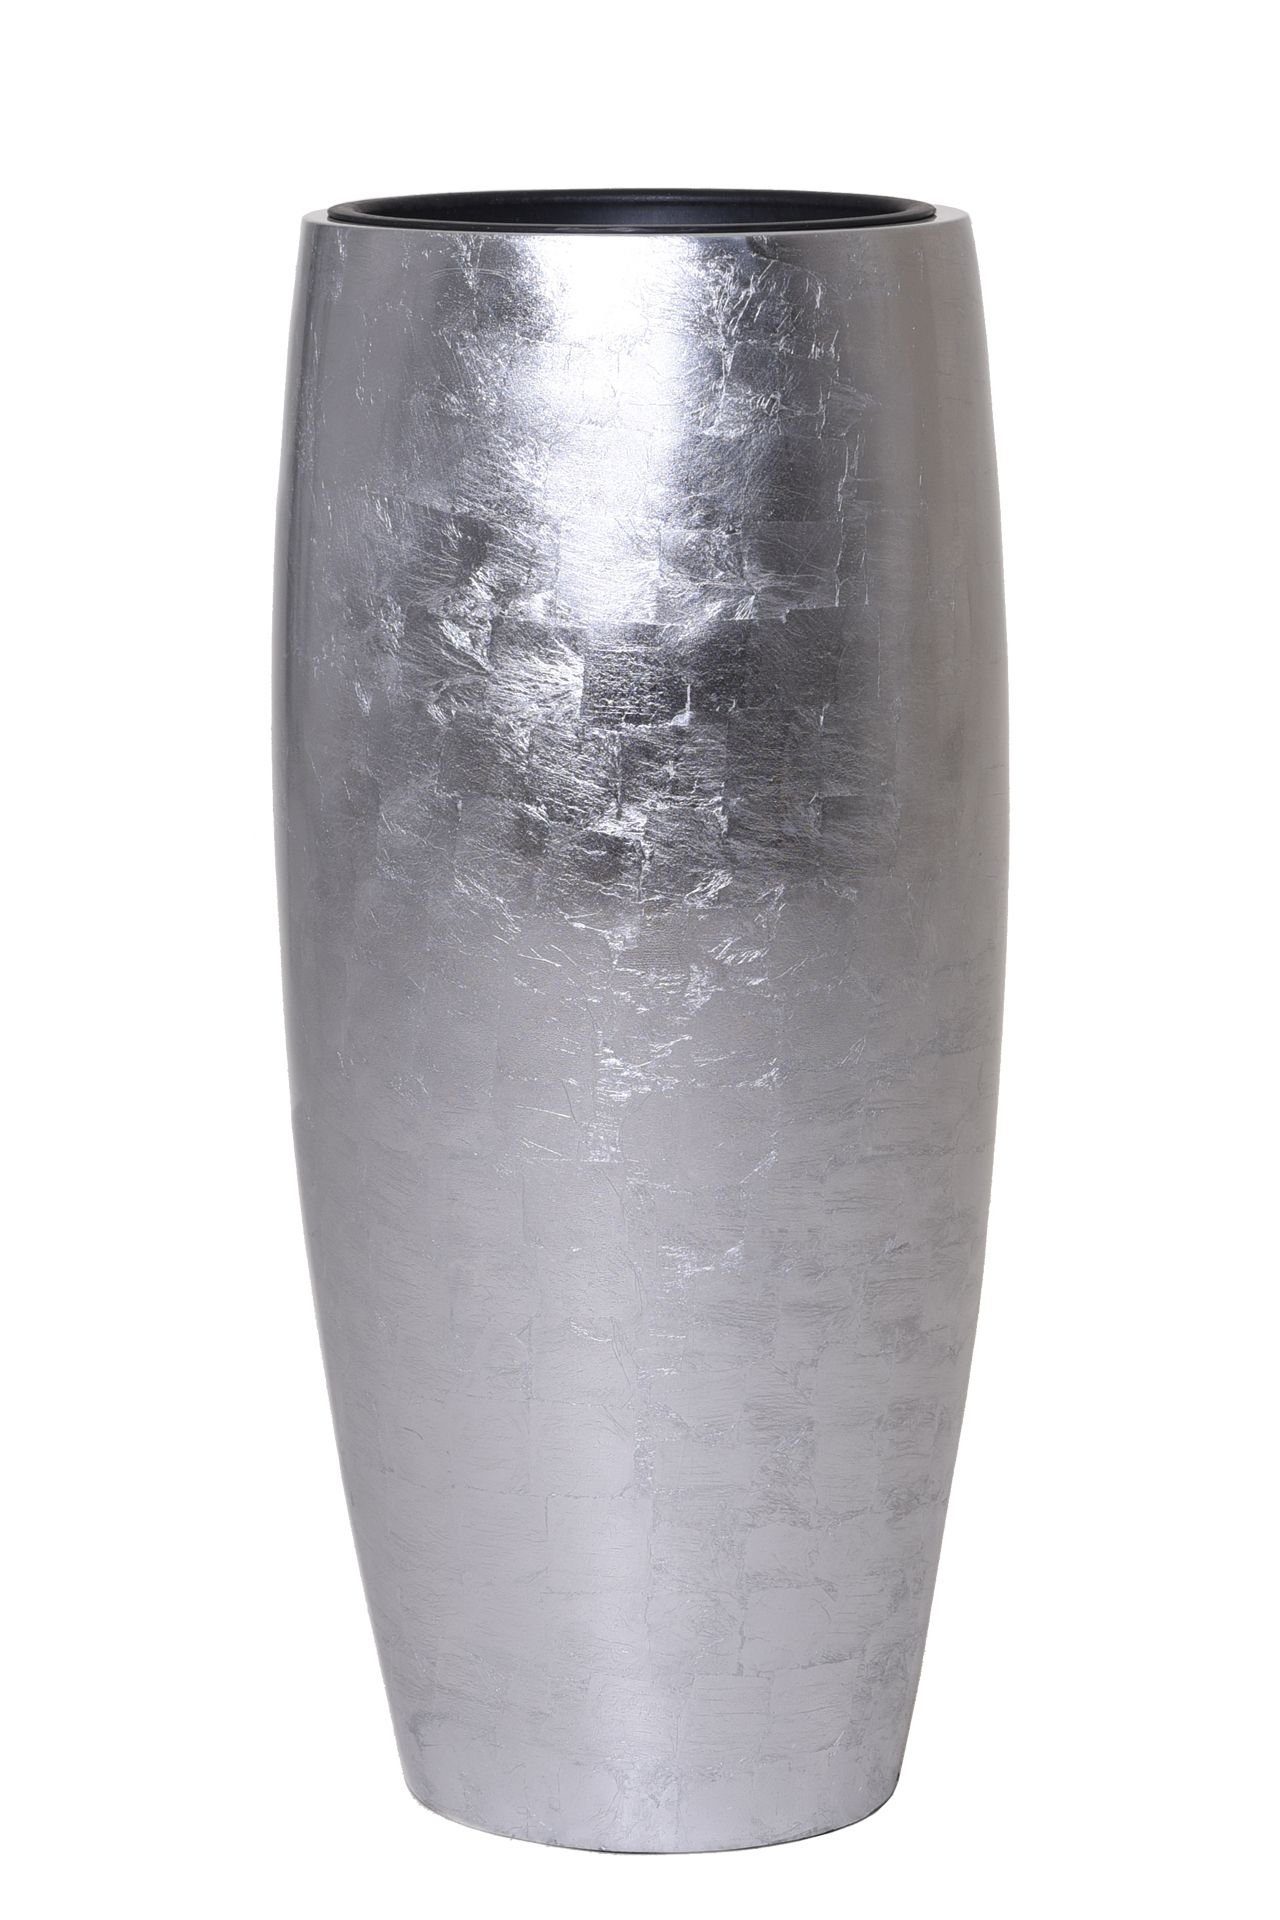 VIVANNO Pflanzkübel Pflanzkübel Blumenkübel Fiberglas OPUS Silber Hochglanz - 33x80 cm